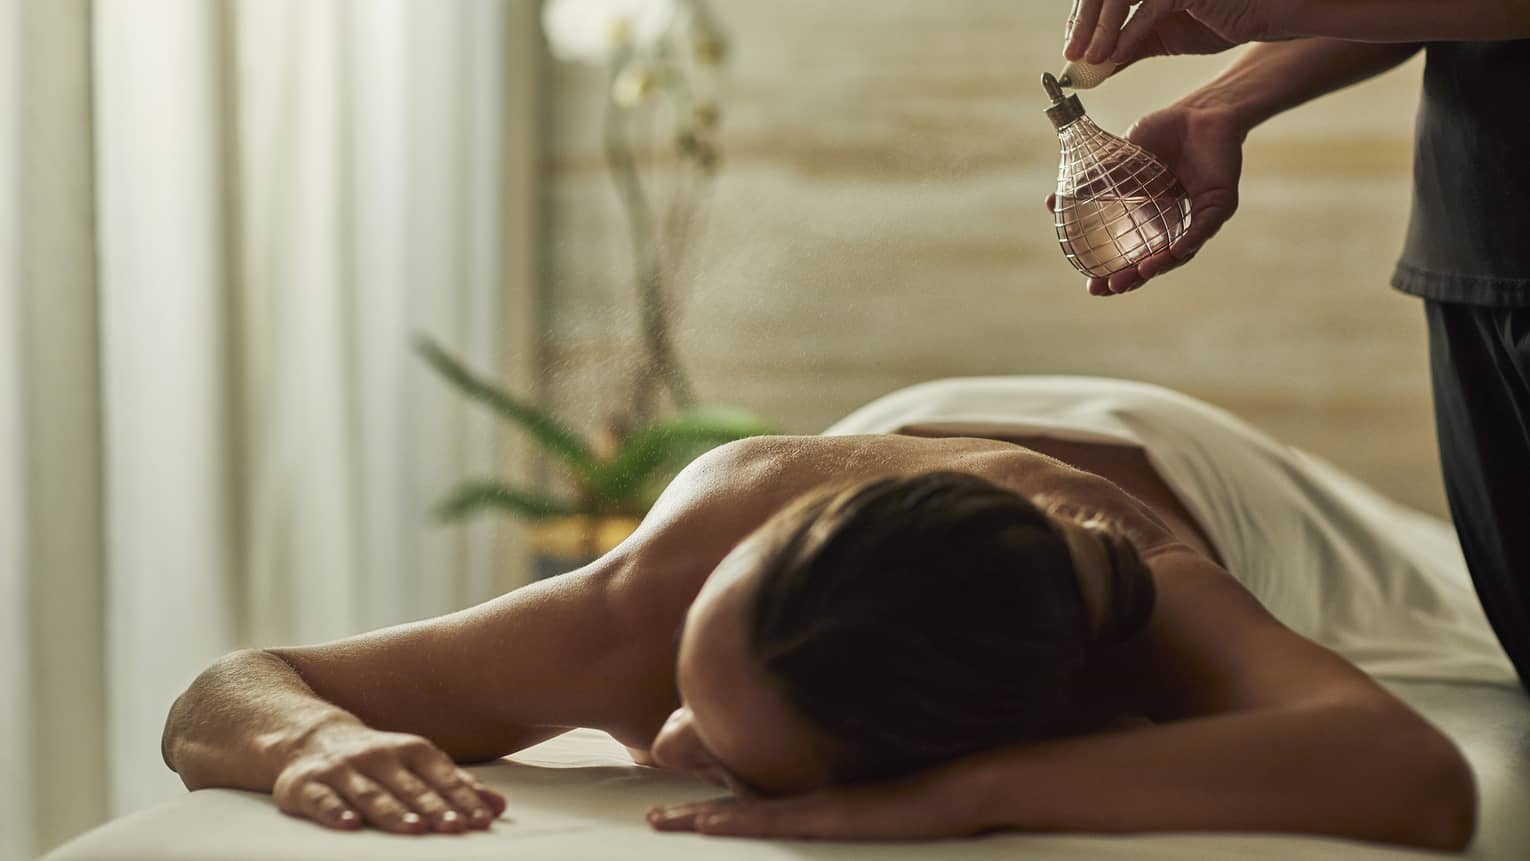 Spa staff sprays perfume bottle over woman lying on massage table